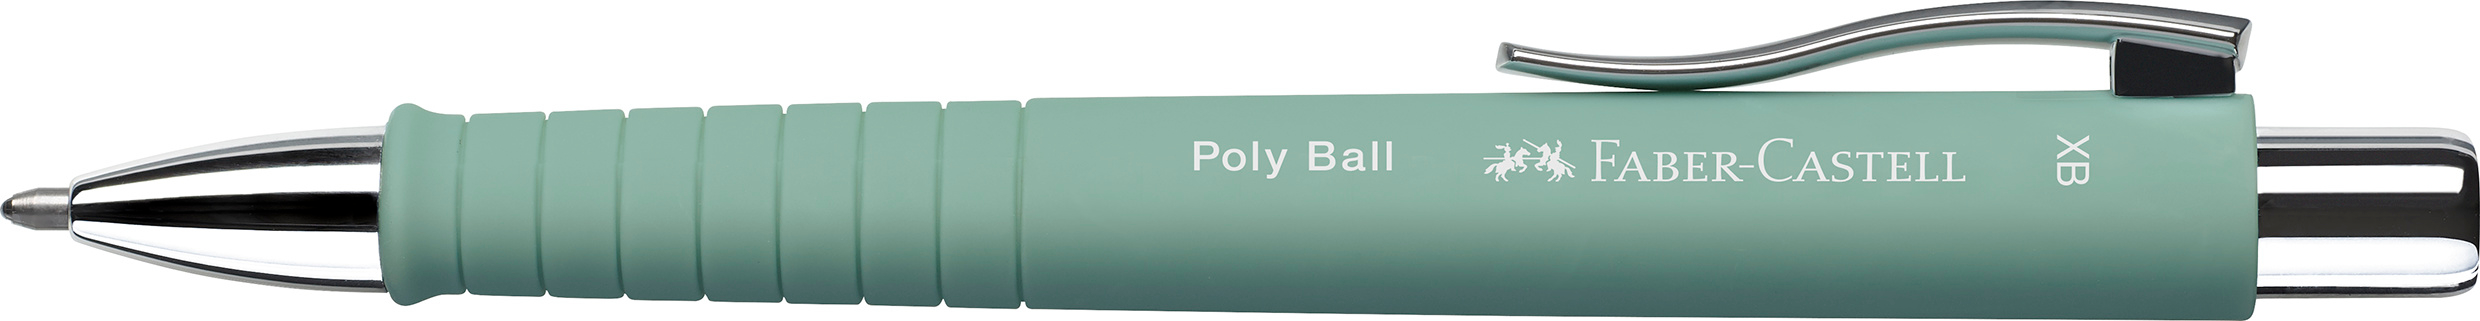 FABER-CASTELL Stylo à bille Poly Ball XB 241165 mint